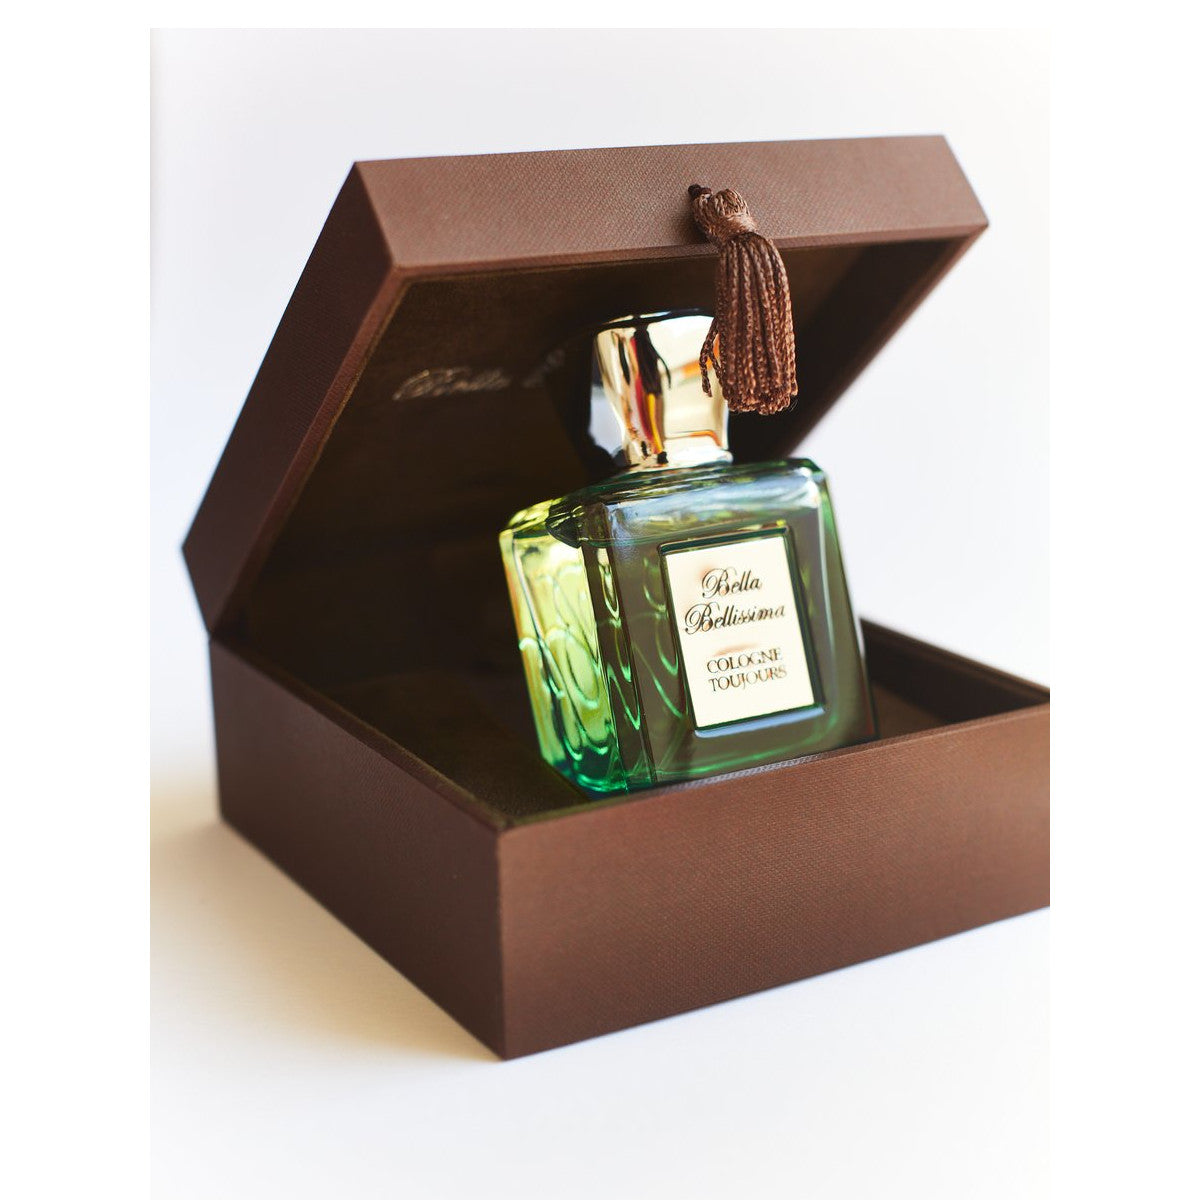 Bella Bellissima Eau De Toujours Cologne Toujours Perfume For Men EDP 50ml - samawa perfumes 